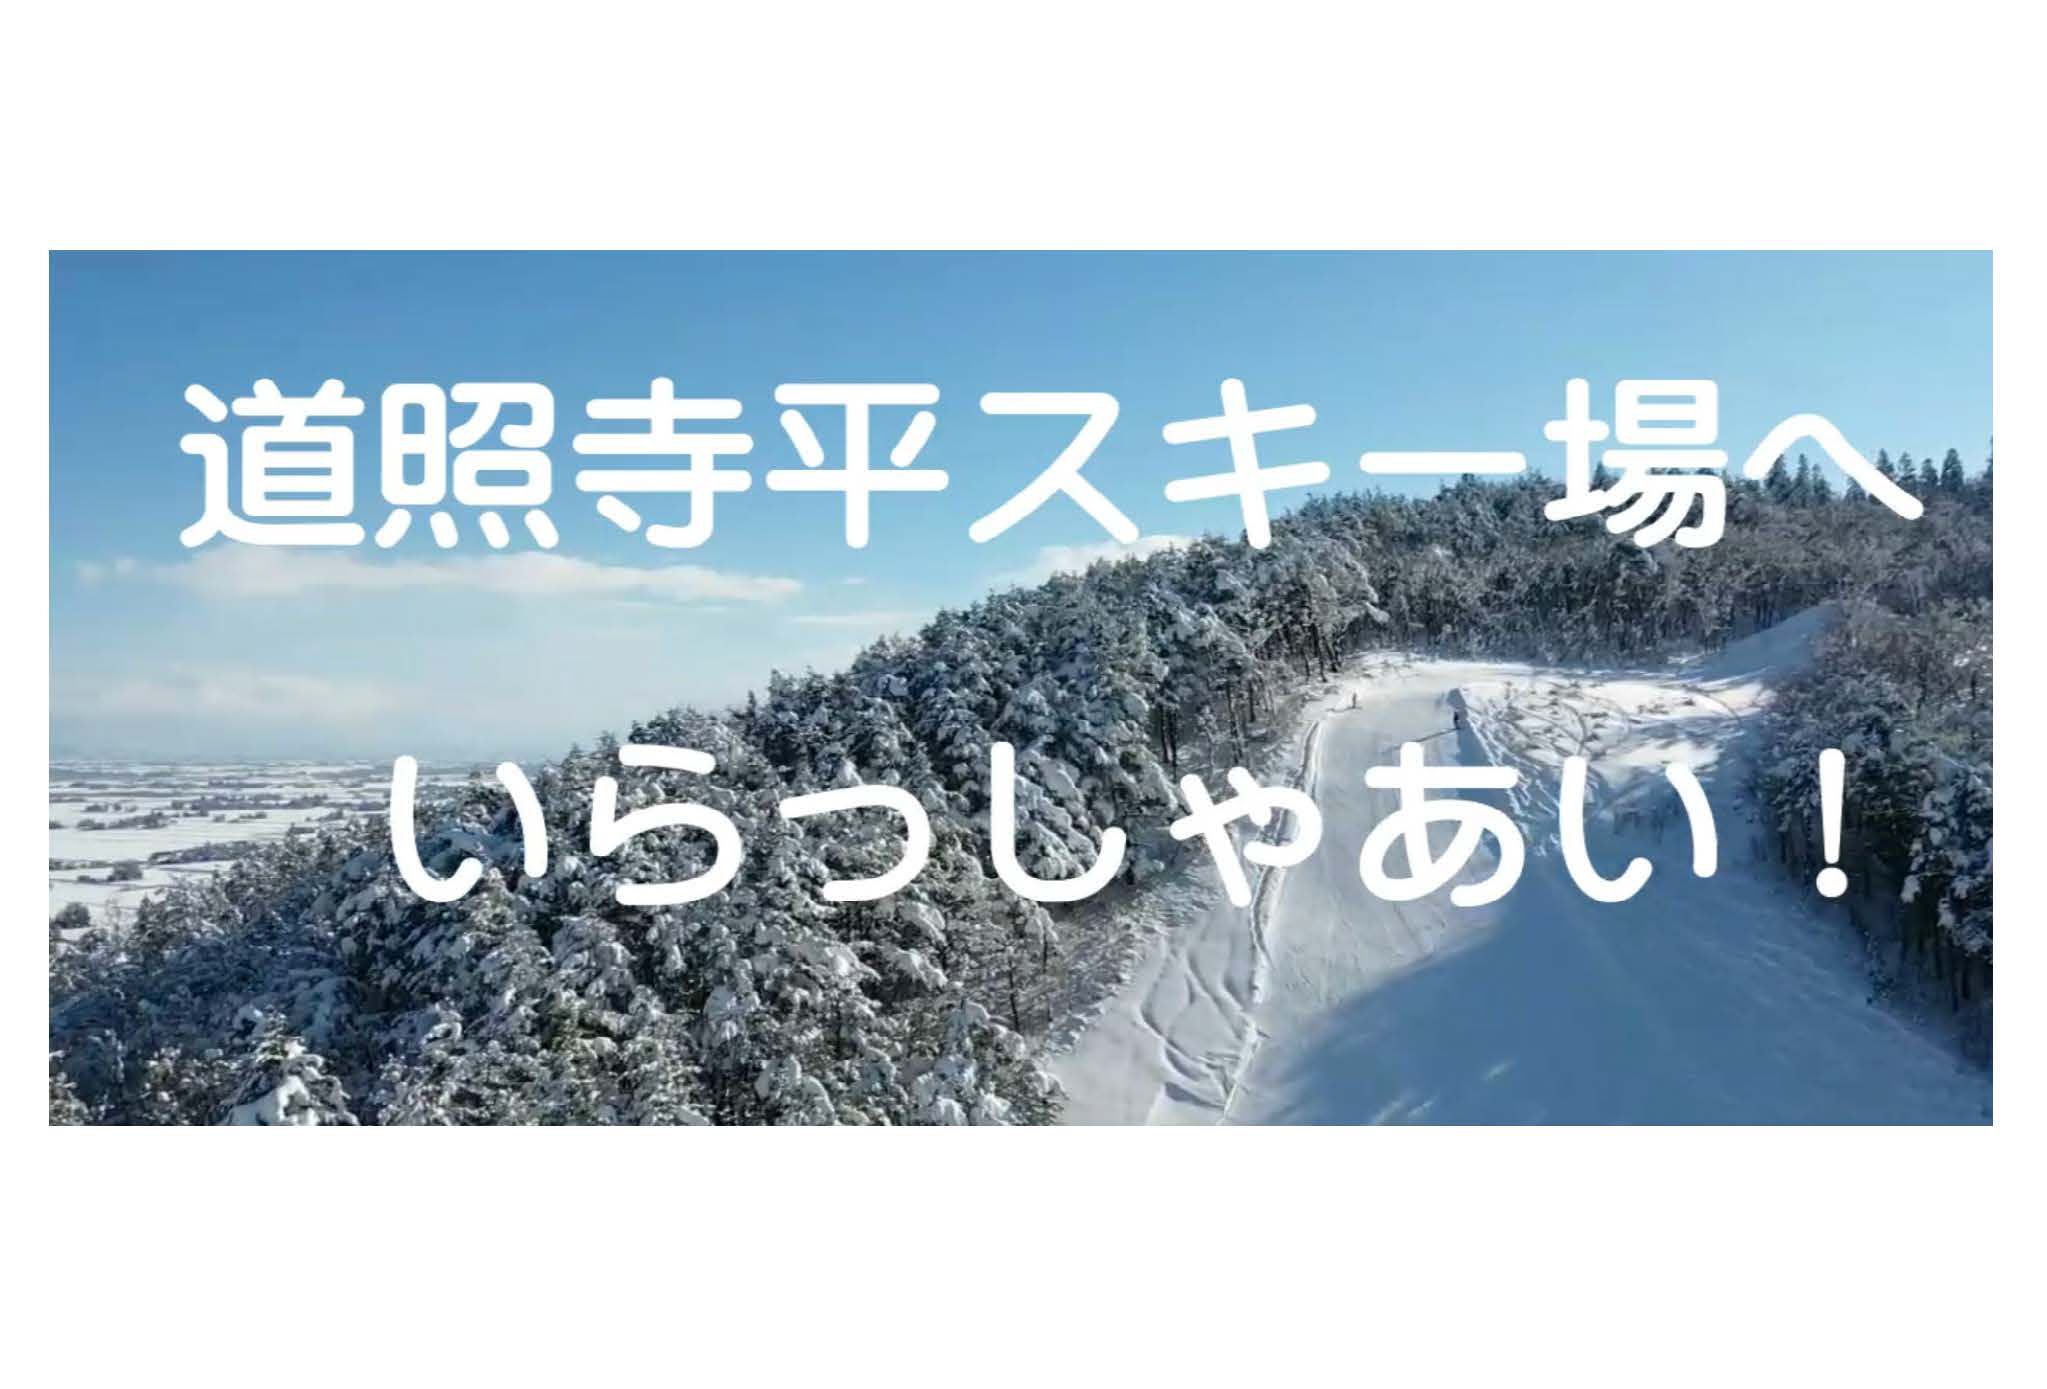 道照寺平スキー場運営委員会が道照寺平スキー場PR動画を制作！